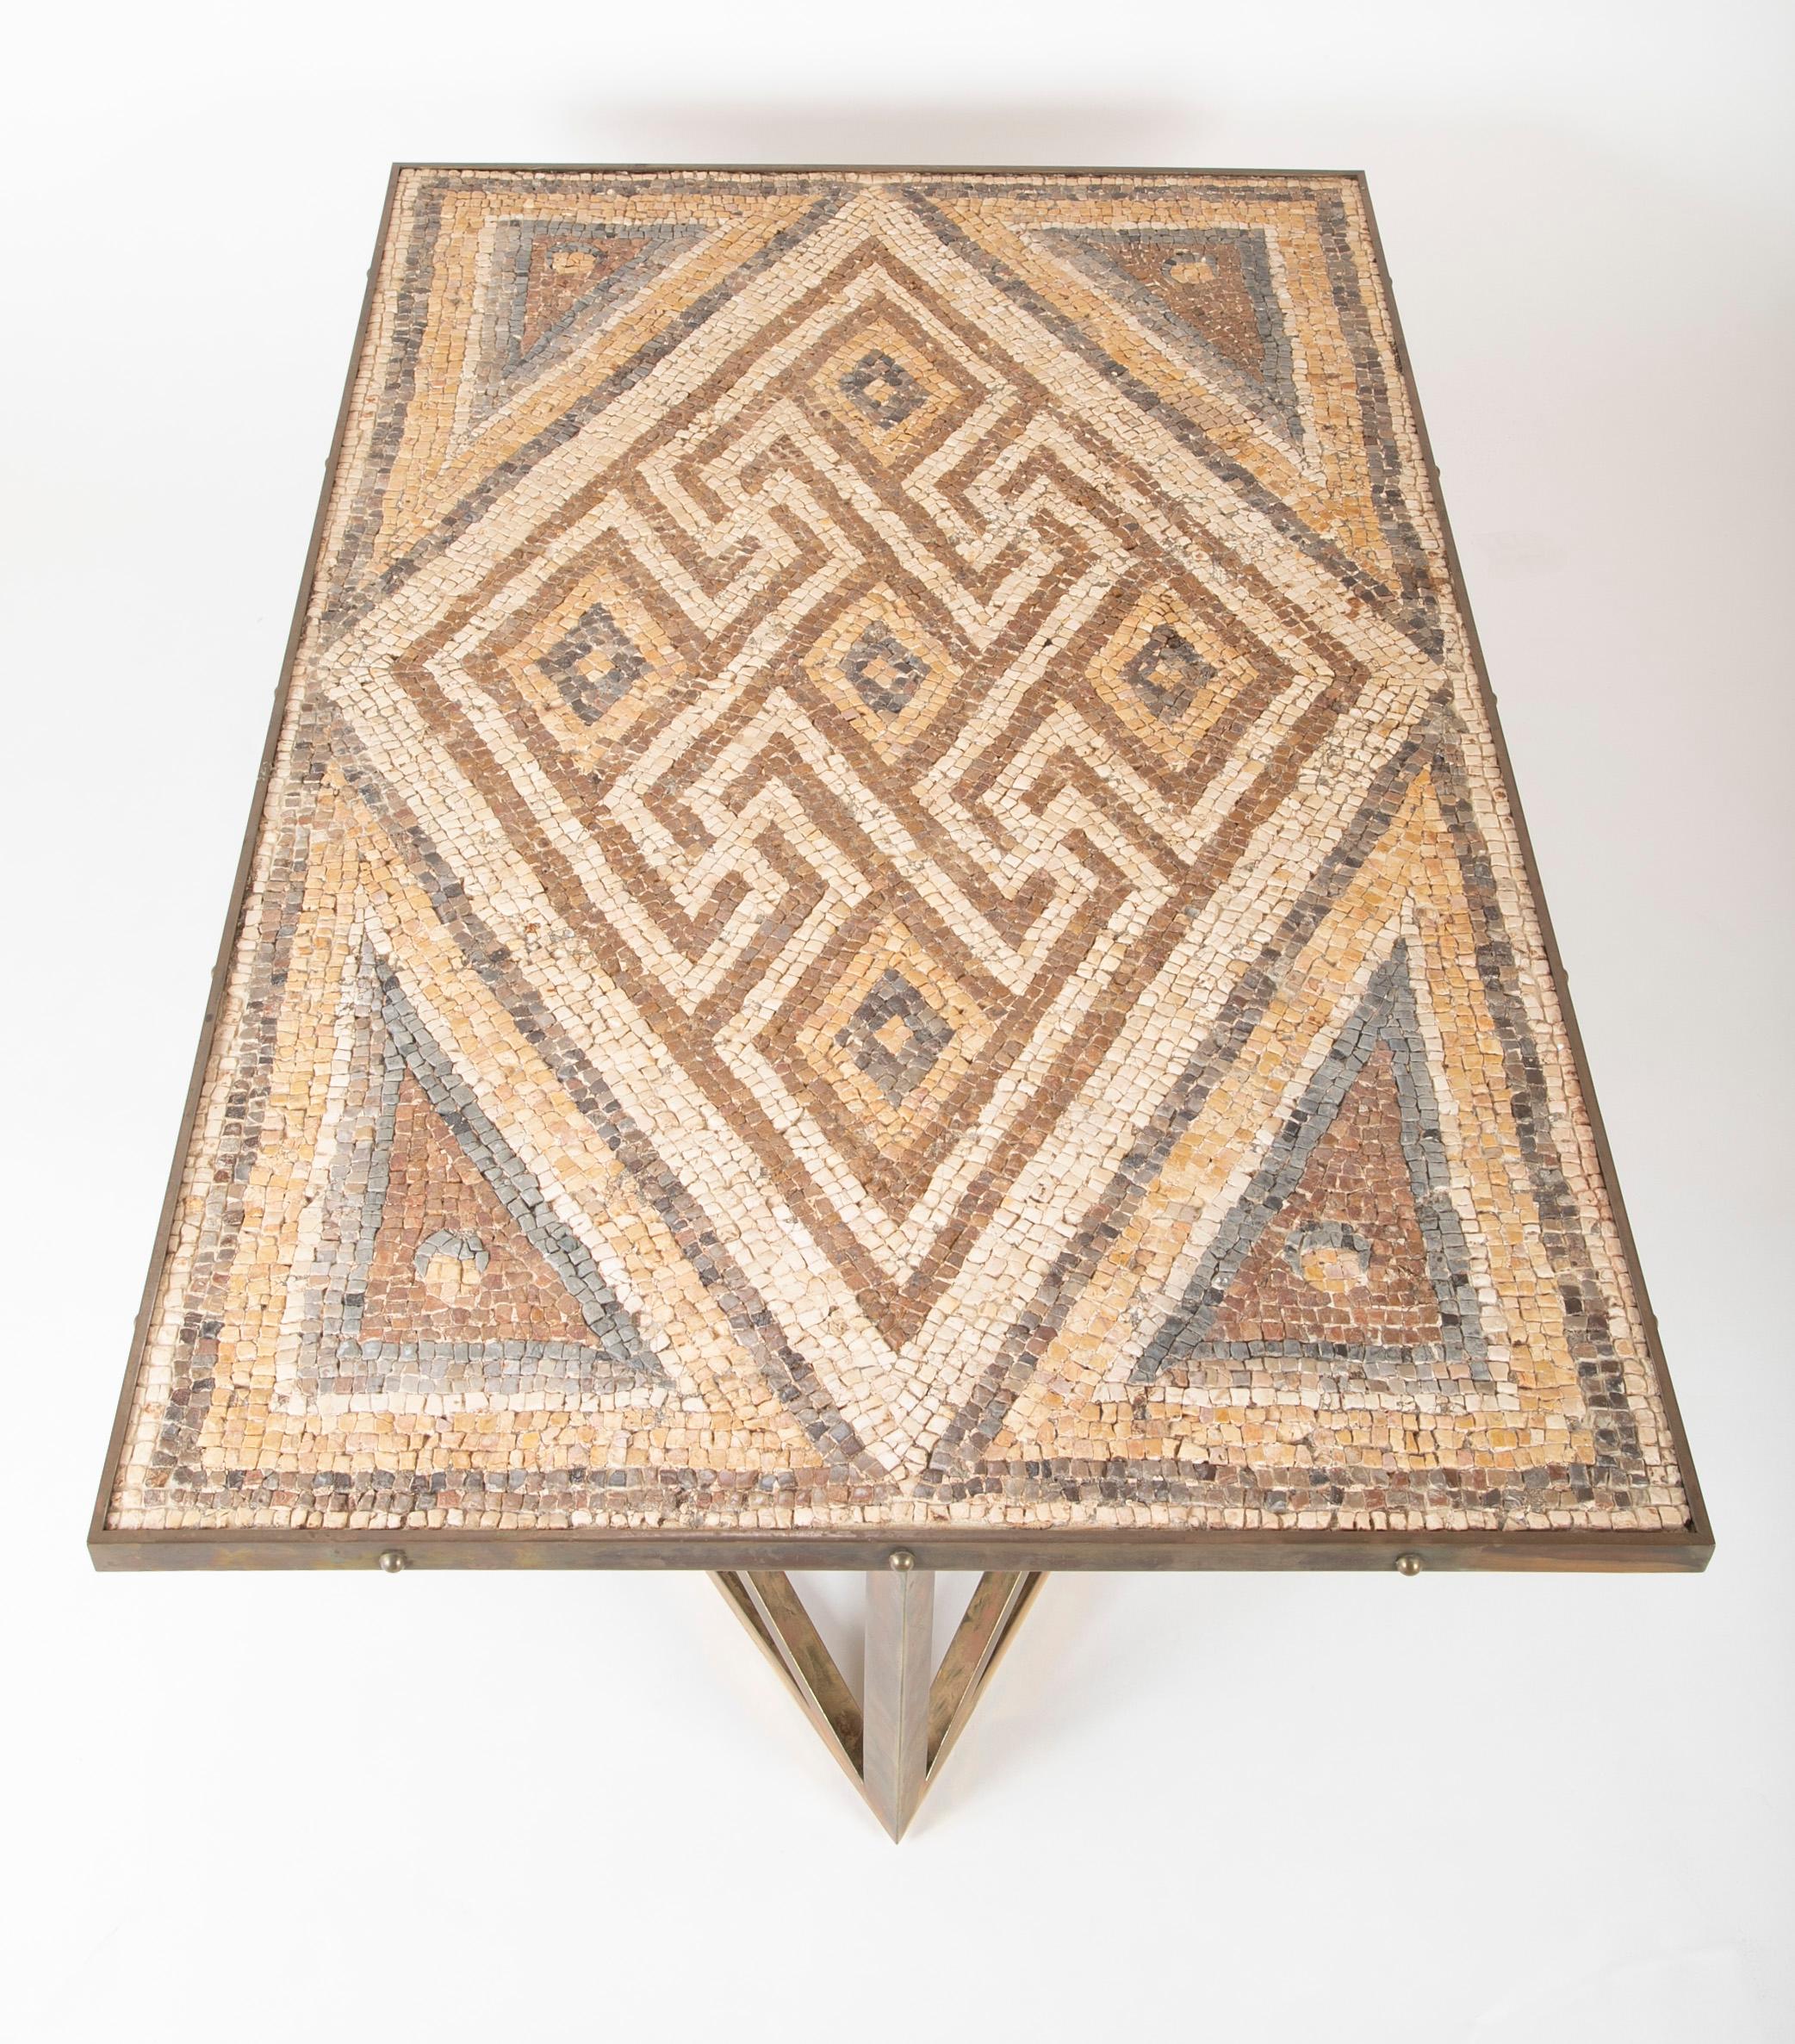 Classical Roman Ancient Roman Mosaic Slab Coffee Table